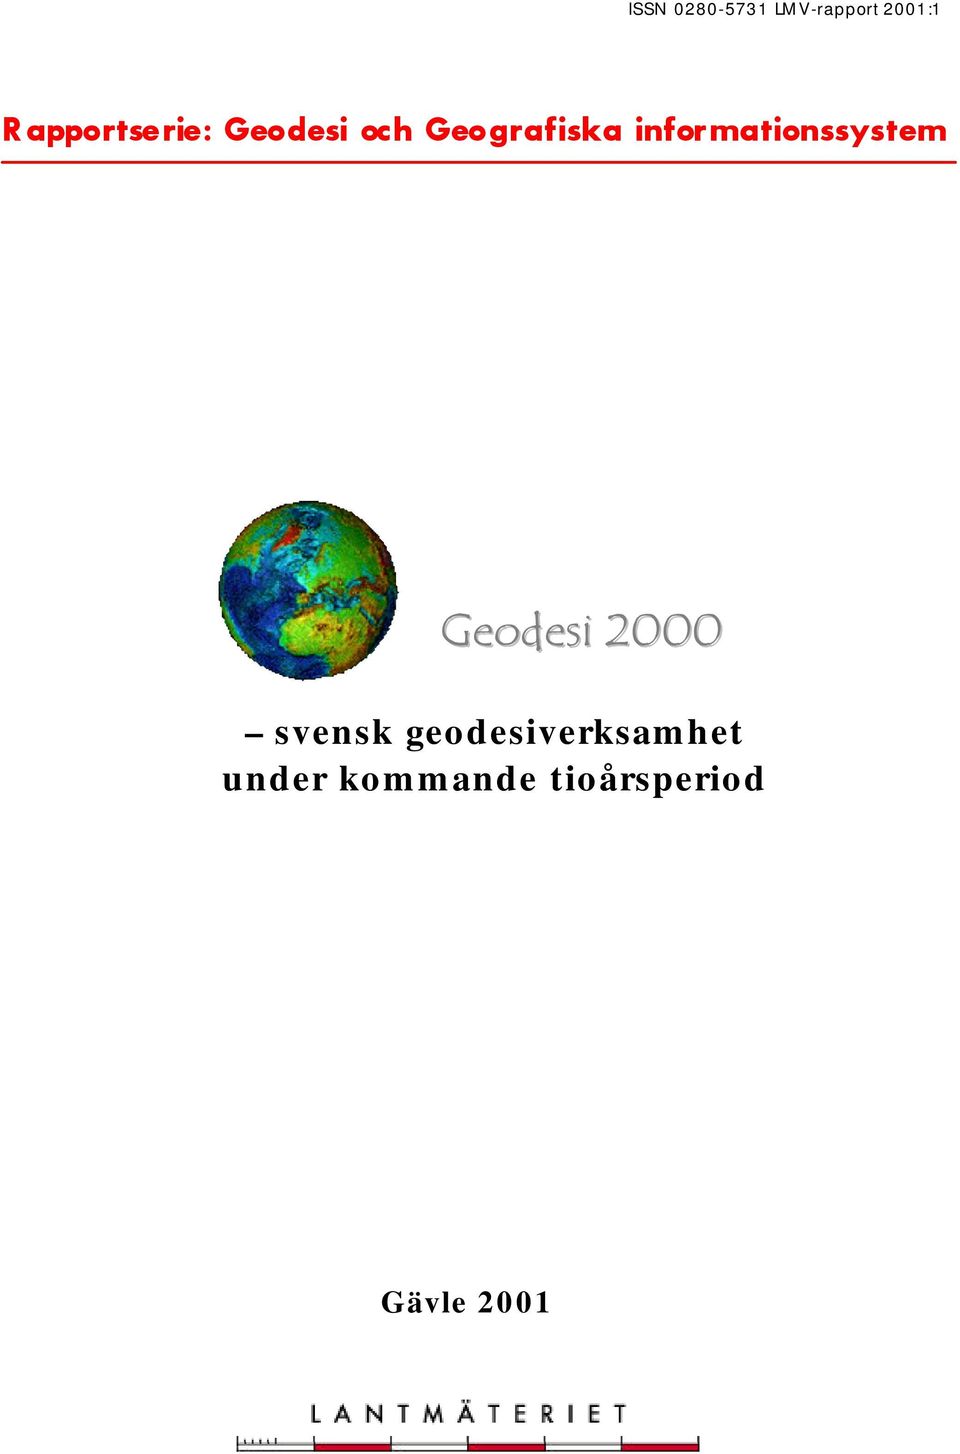 inform ationssystem Geodesi 2000 svensk